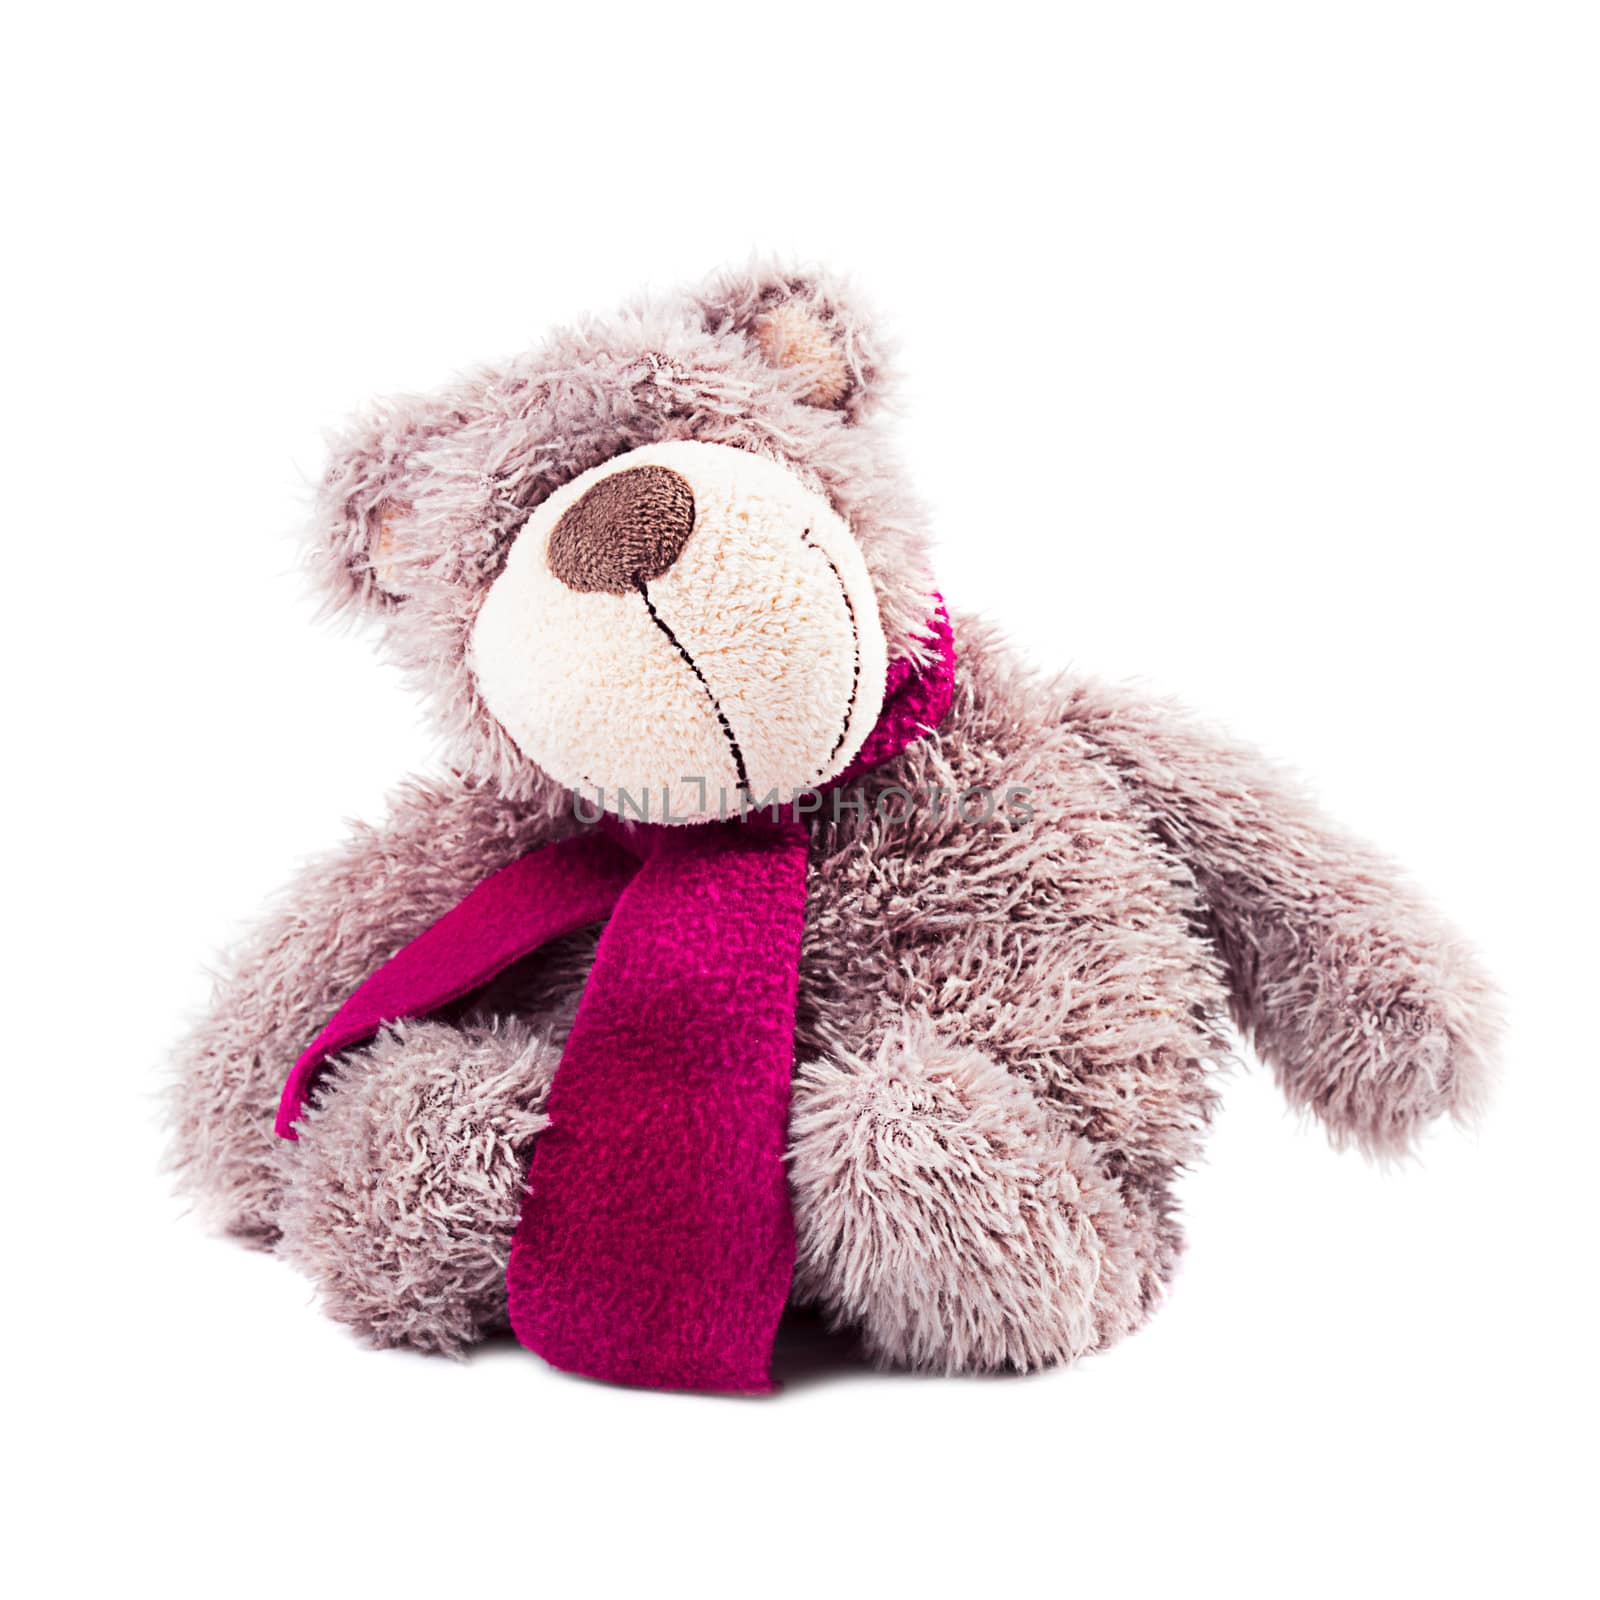 Tebby bear - plush toy, isolated on white